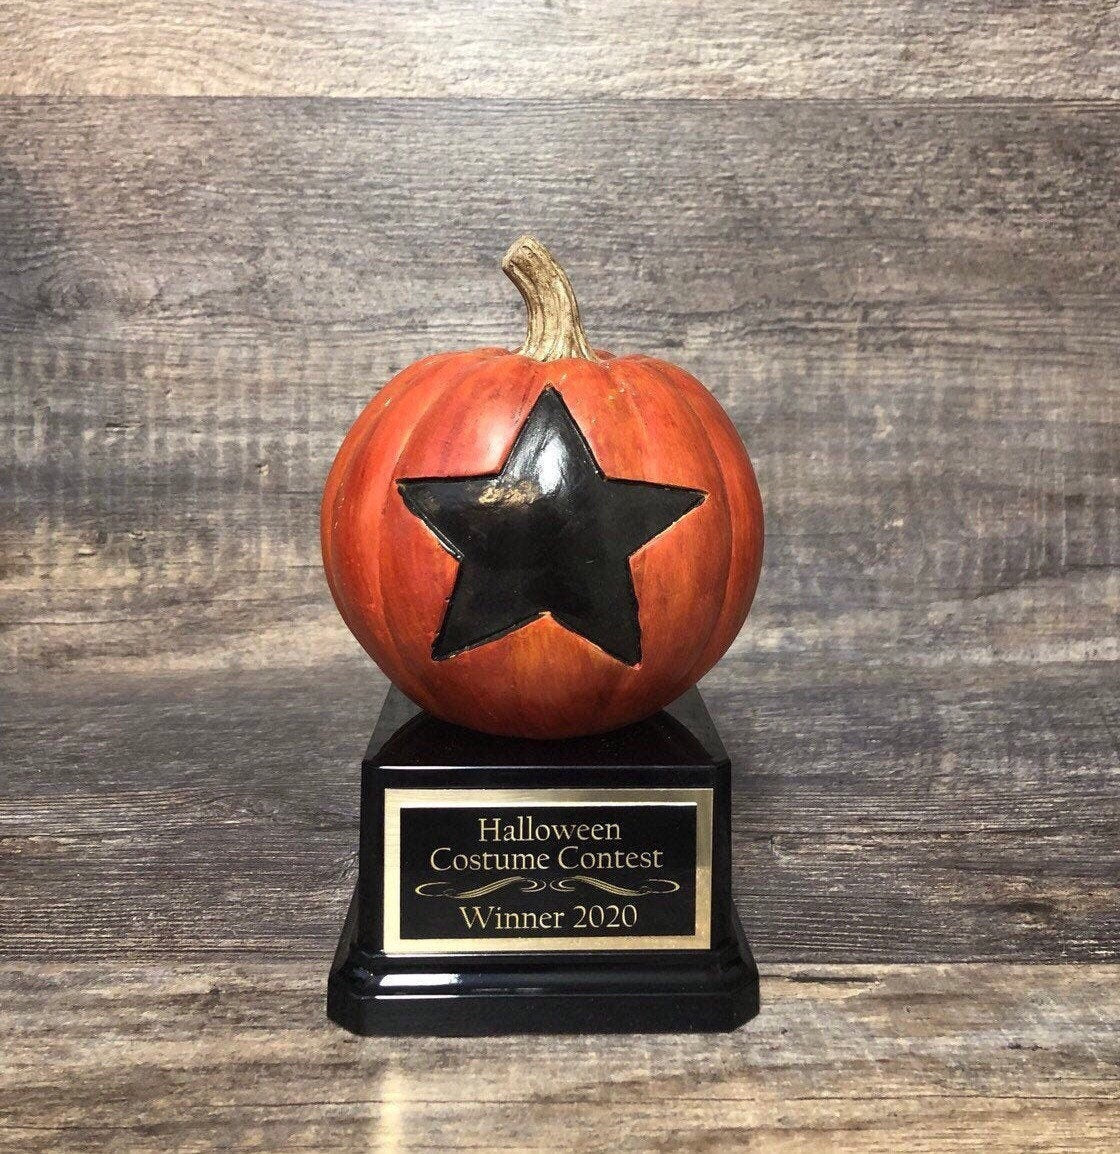 Halloween Trophy Pumpkin Carving Contest Pumpkin with Black Star Halloween Costume Contest Jack O Lantern Trophy Trunk or Treat Winner